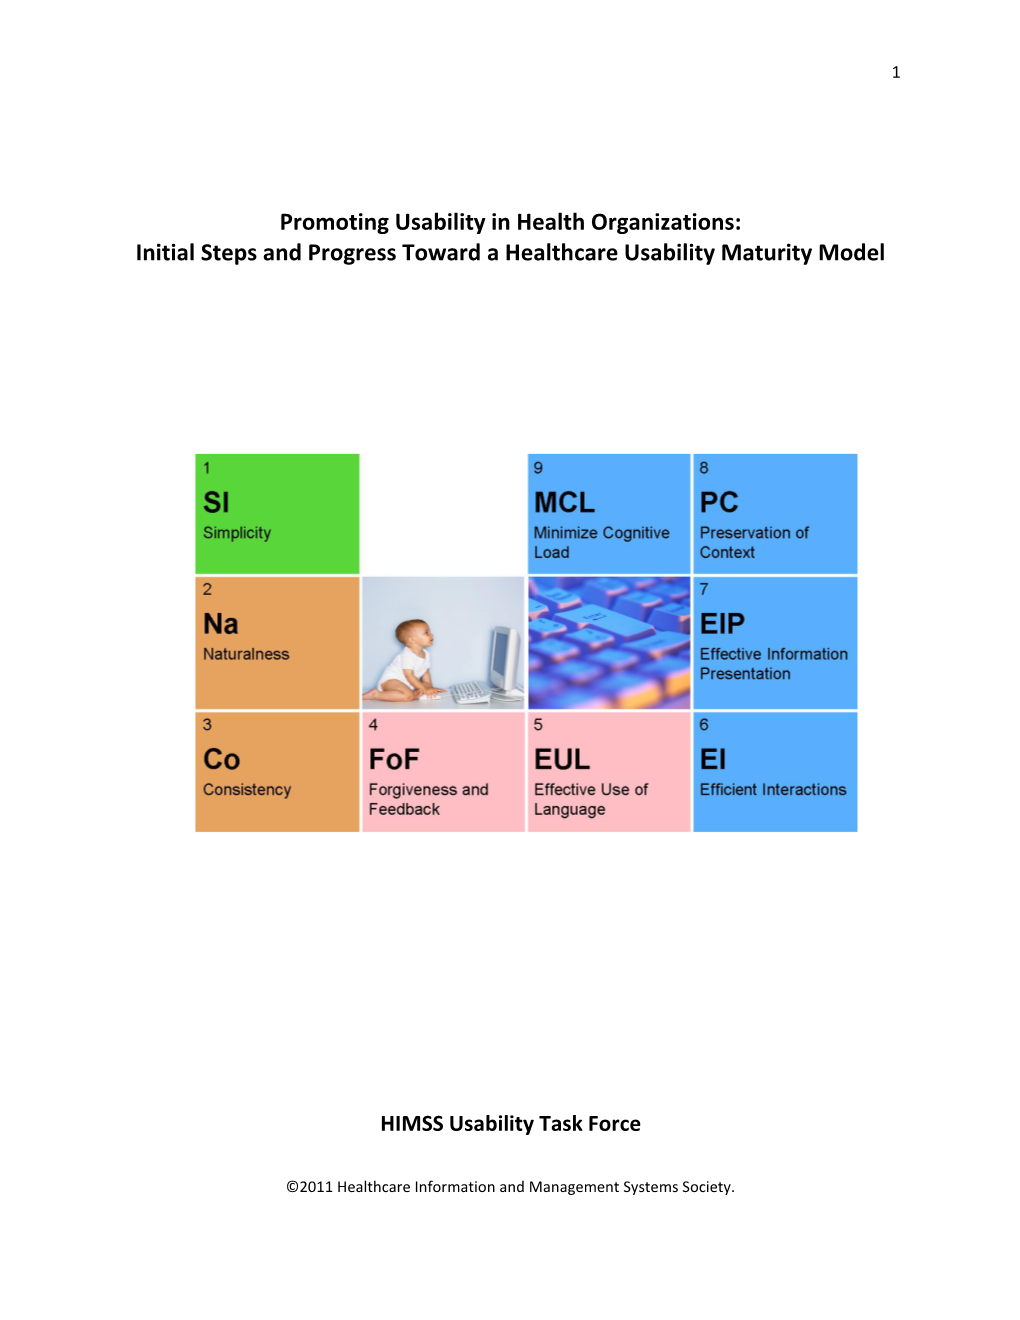 Initial Steps and Progress Toward a Healthcare Usability Maturity Model